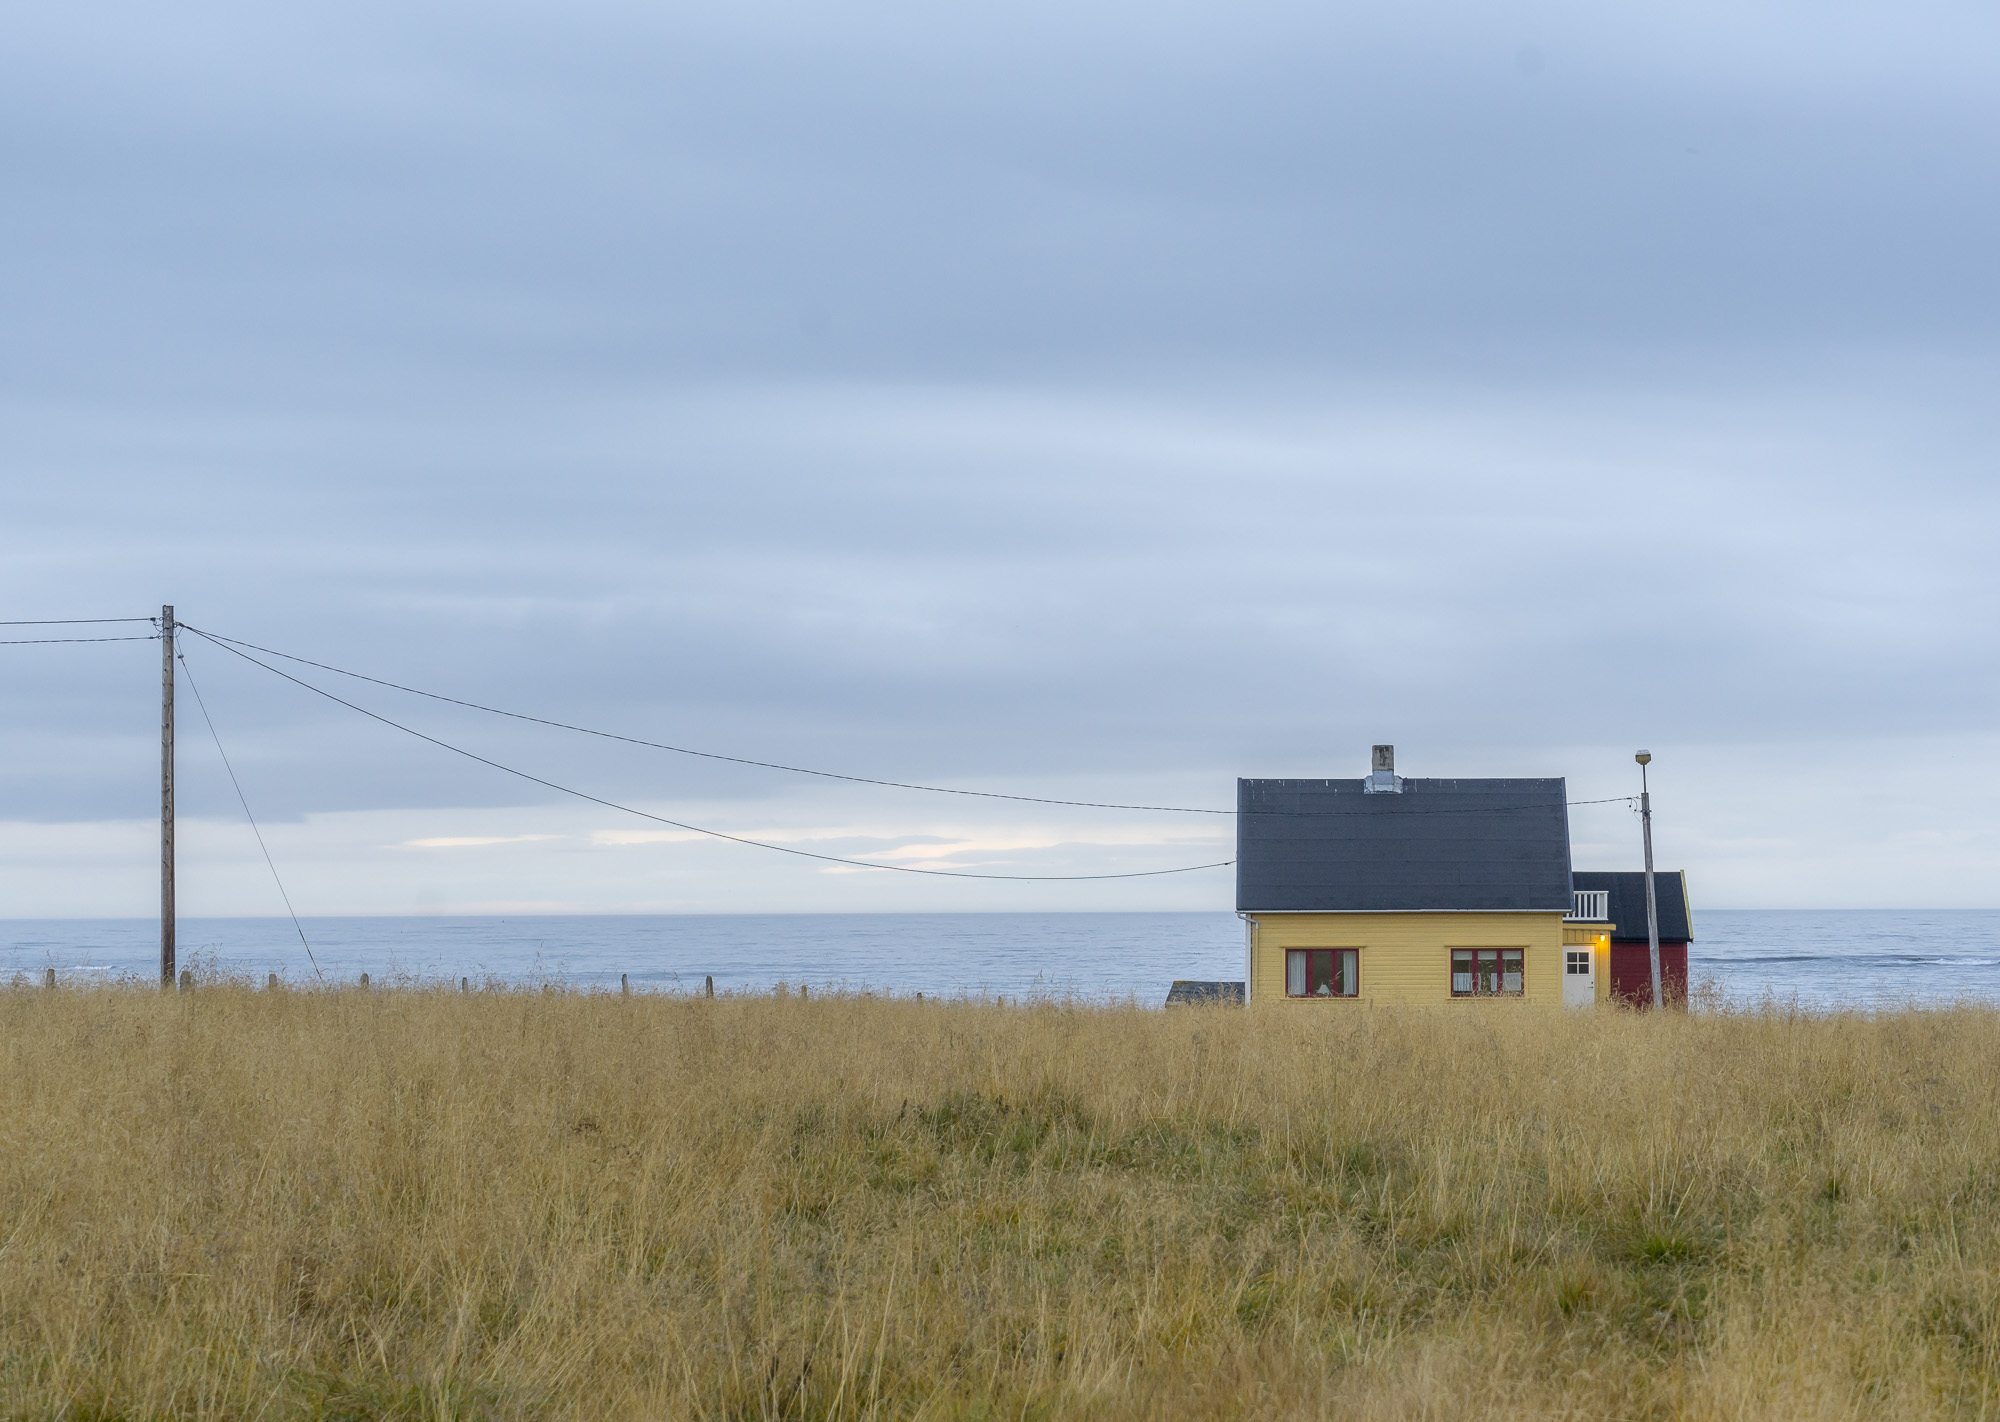 House and ocean cliche from Norway Finnmark Varangerhalvøya